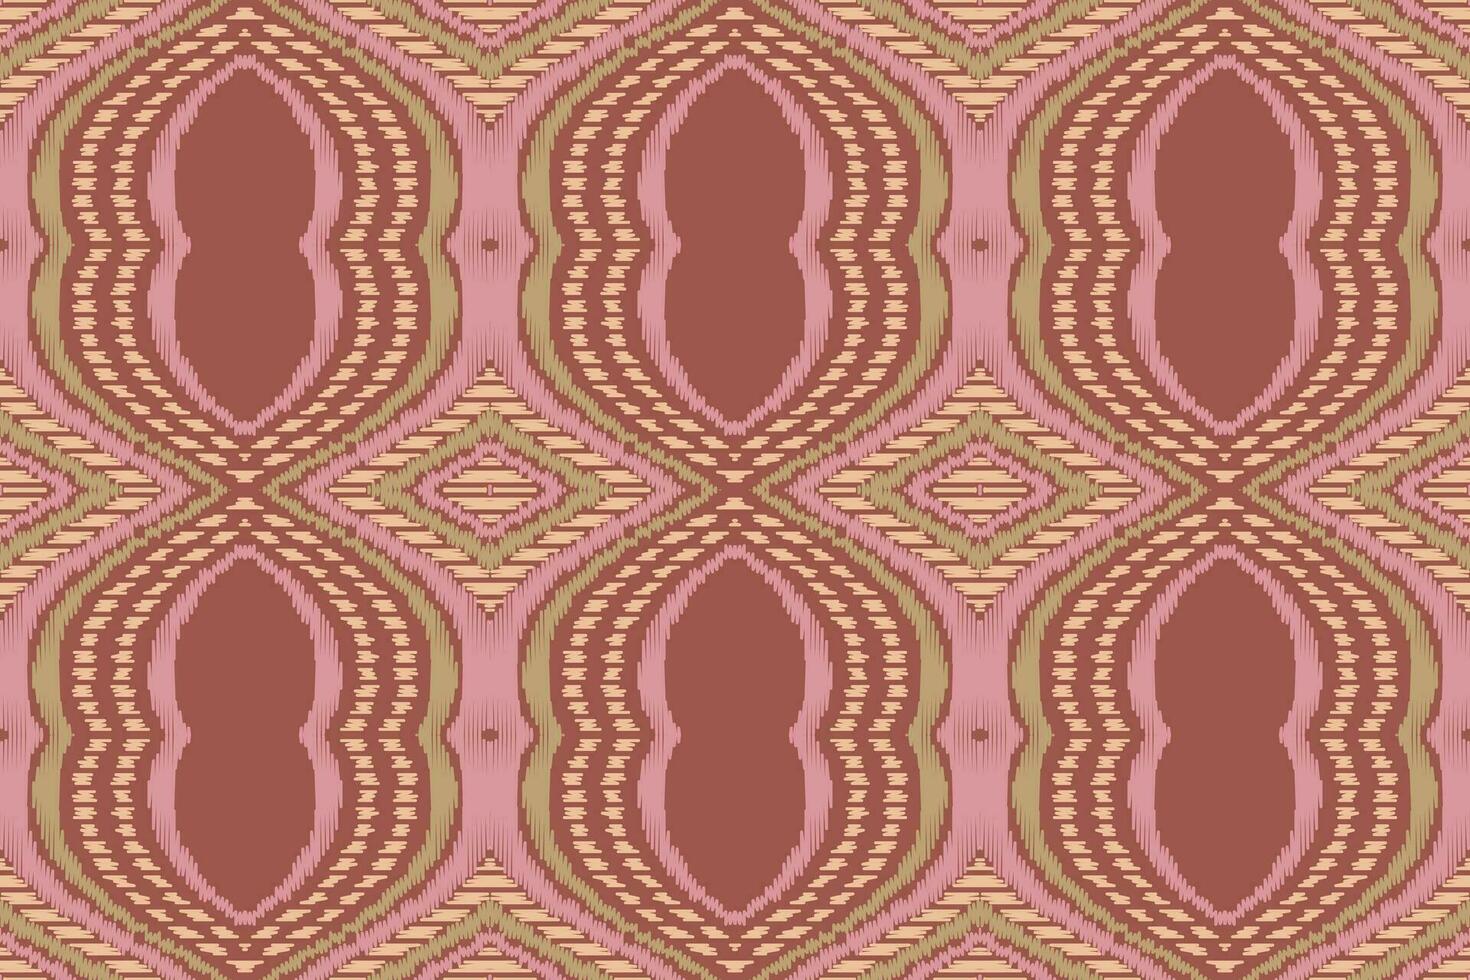 ikat damasco cachemir bordado antecedentes. ikat textura geométrico étnico oriental modelo tradicional. ikat azteca estilo resumen diseño para impresión textura,tela,sari,sari,alfombra. vector